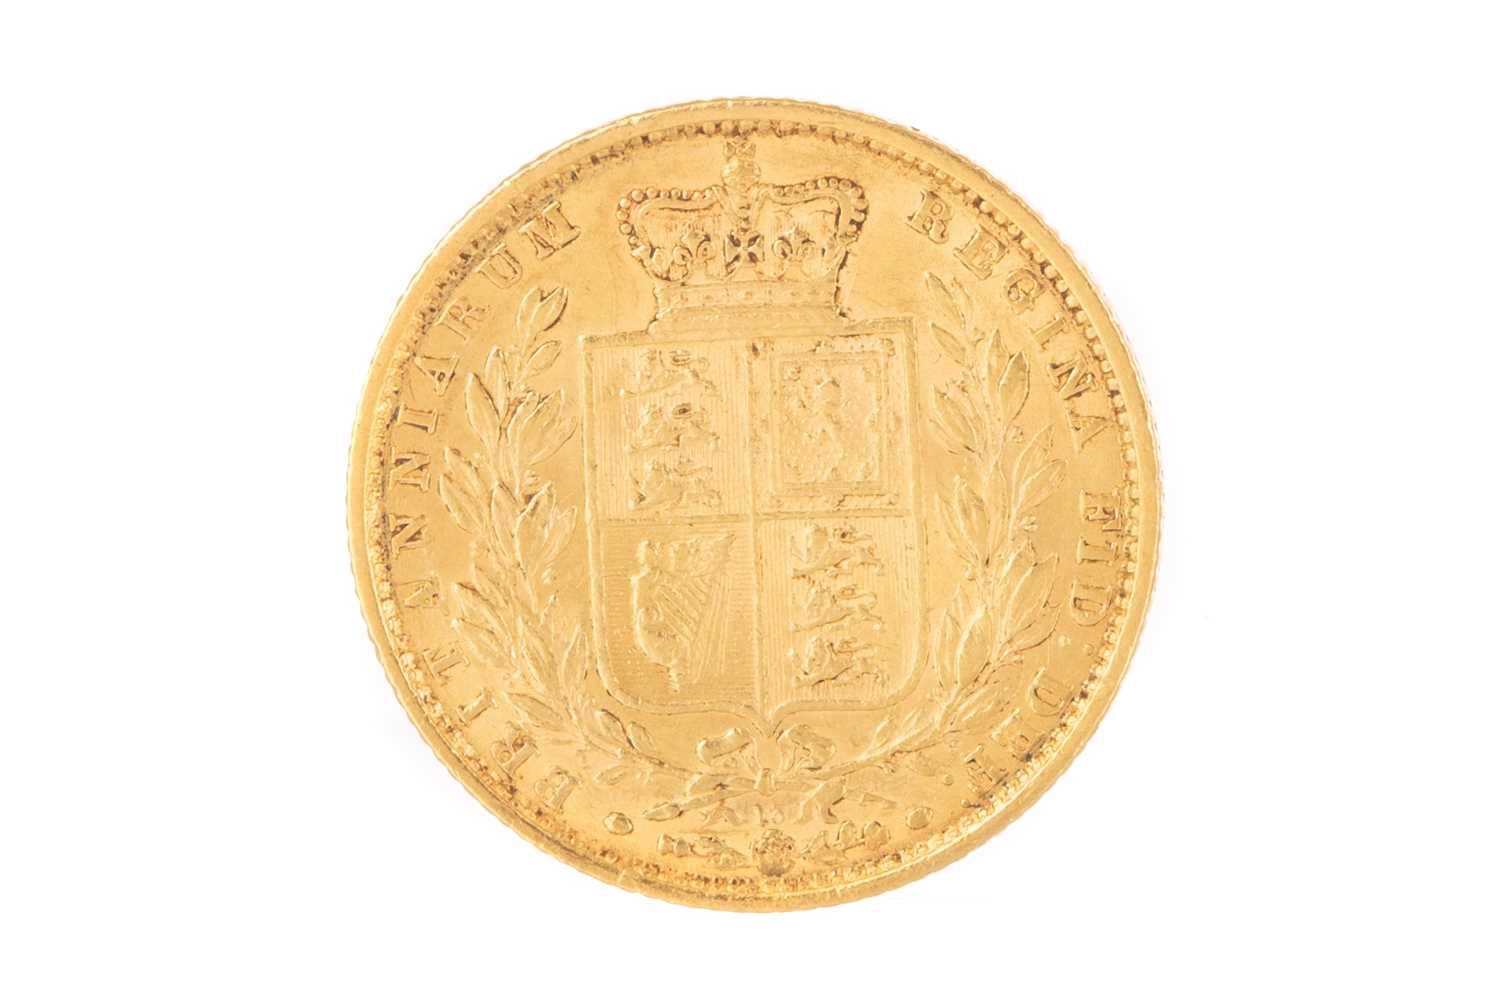 VICTORIA GOLD SOVEREIGN 1863,